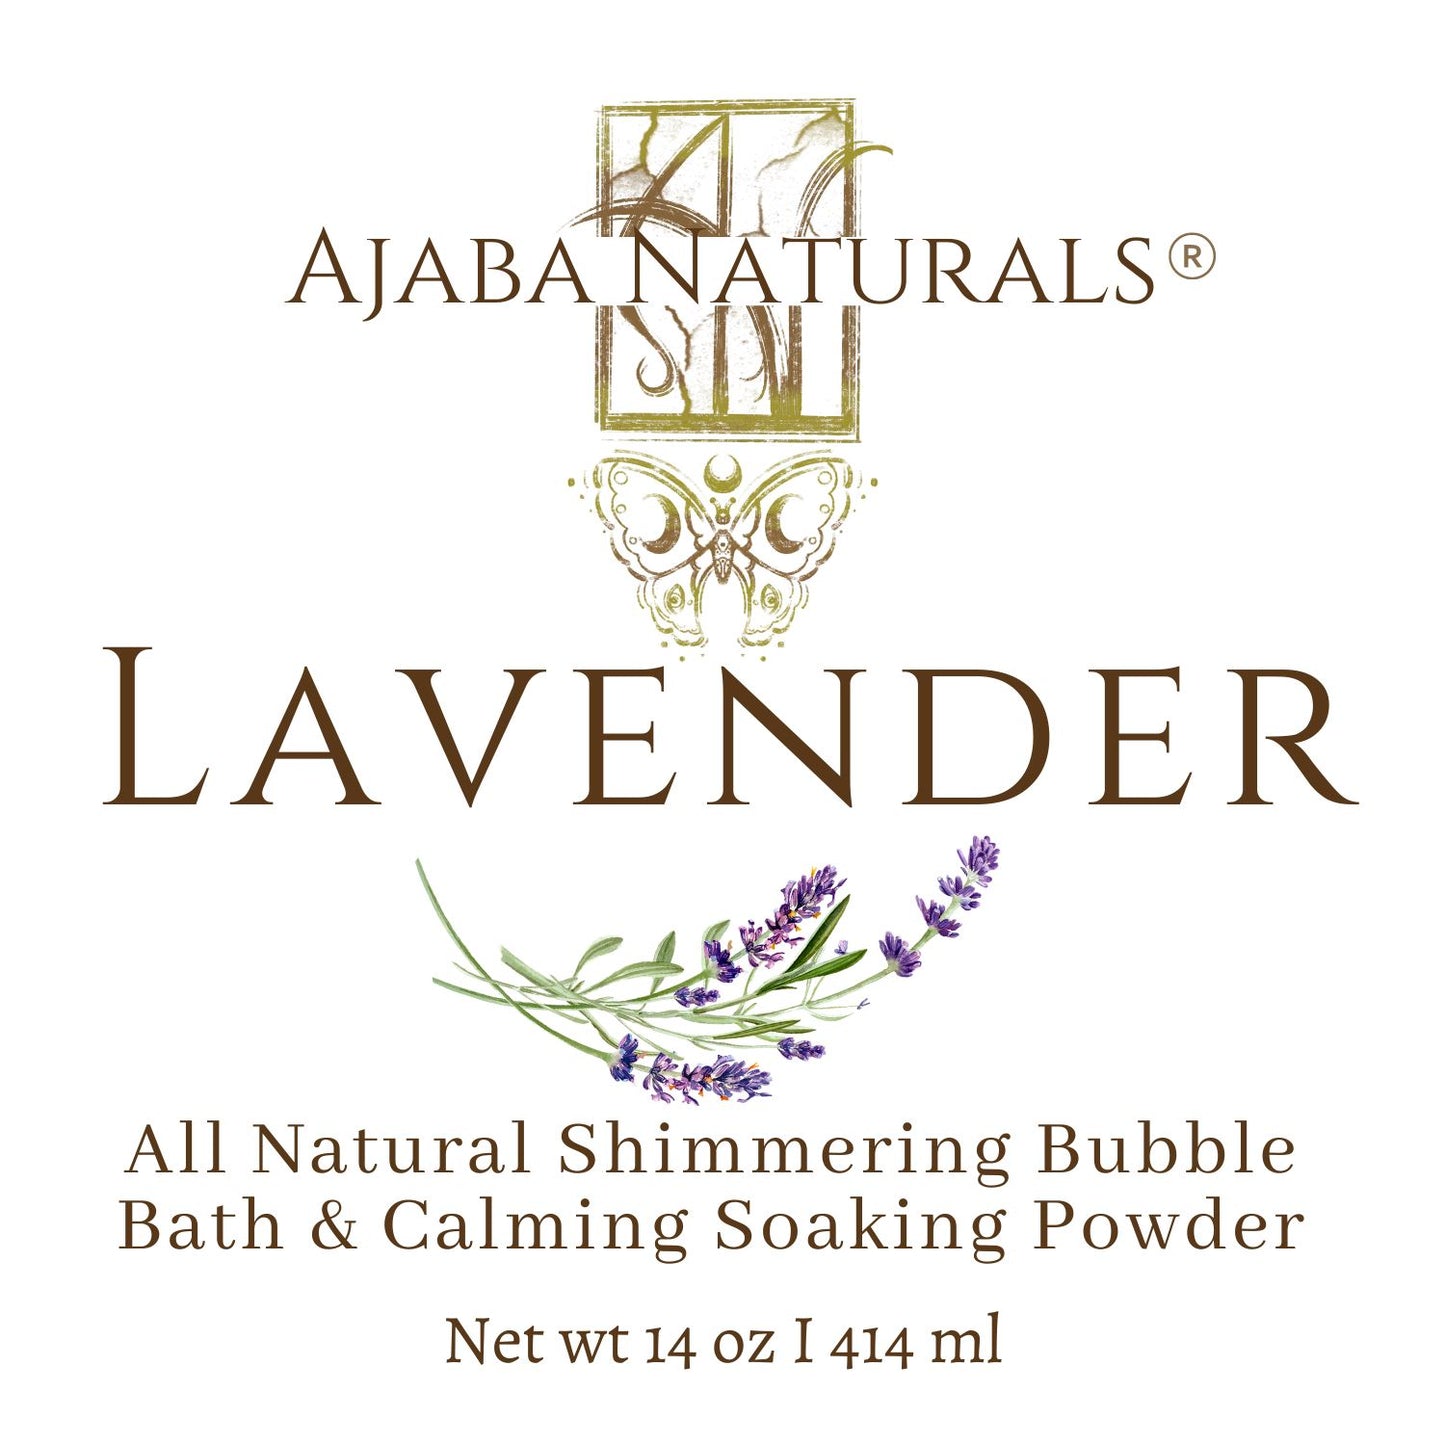 All Natural Shimmering Bubble Bath and Calming Soak Powder Bath Soak AJABA NATURALS® Lavender 